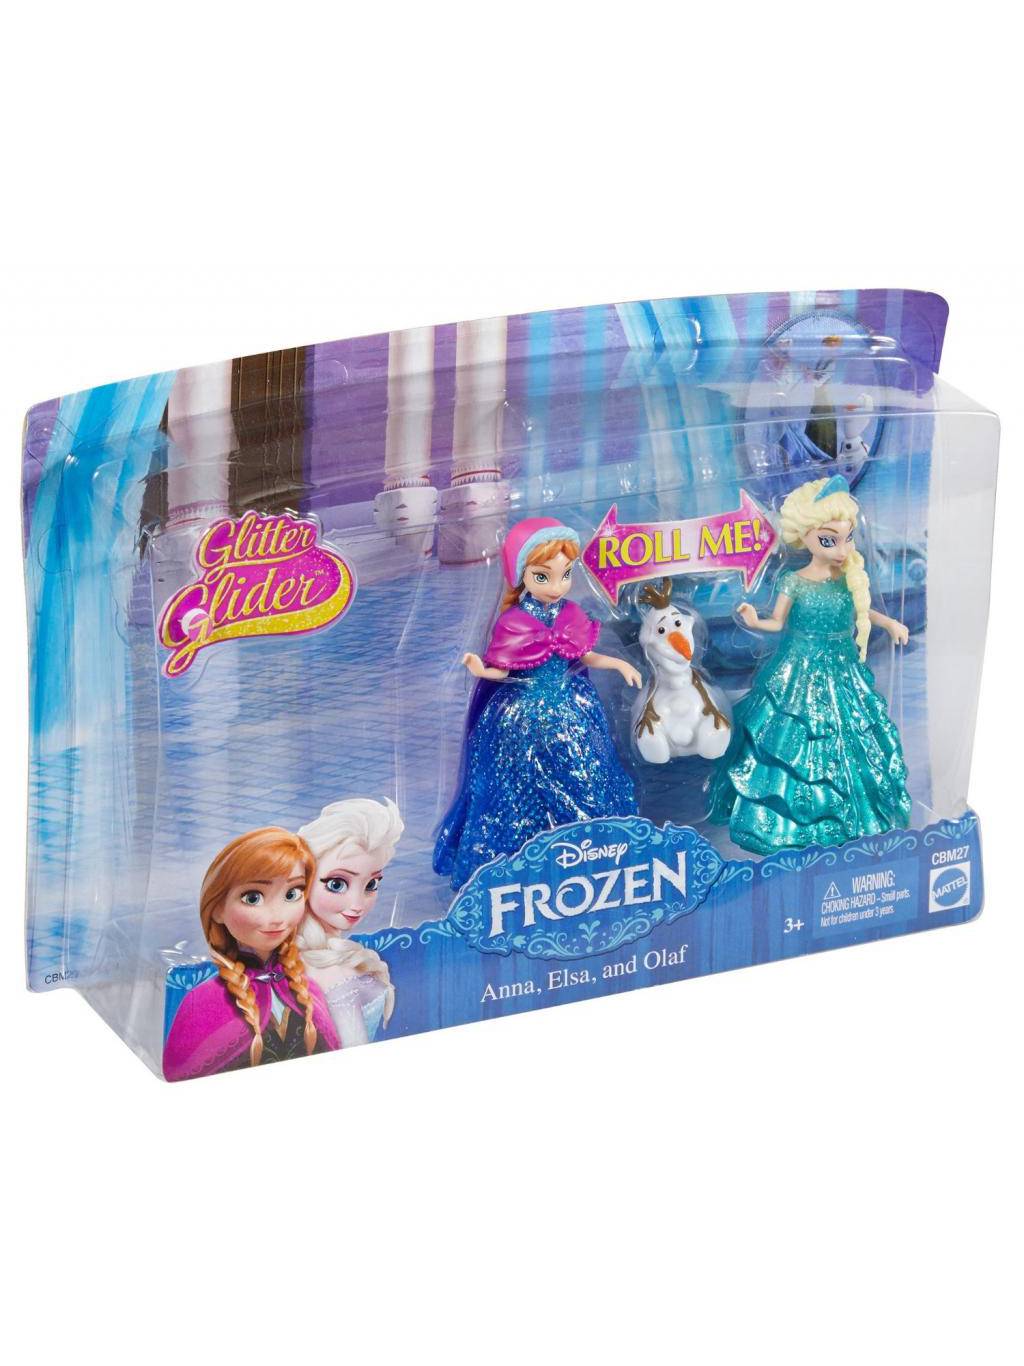 Disney Frozen Glitter Glider Anna, Elsa and Olaf Doll Set - image 3 of 3